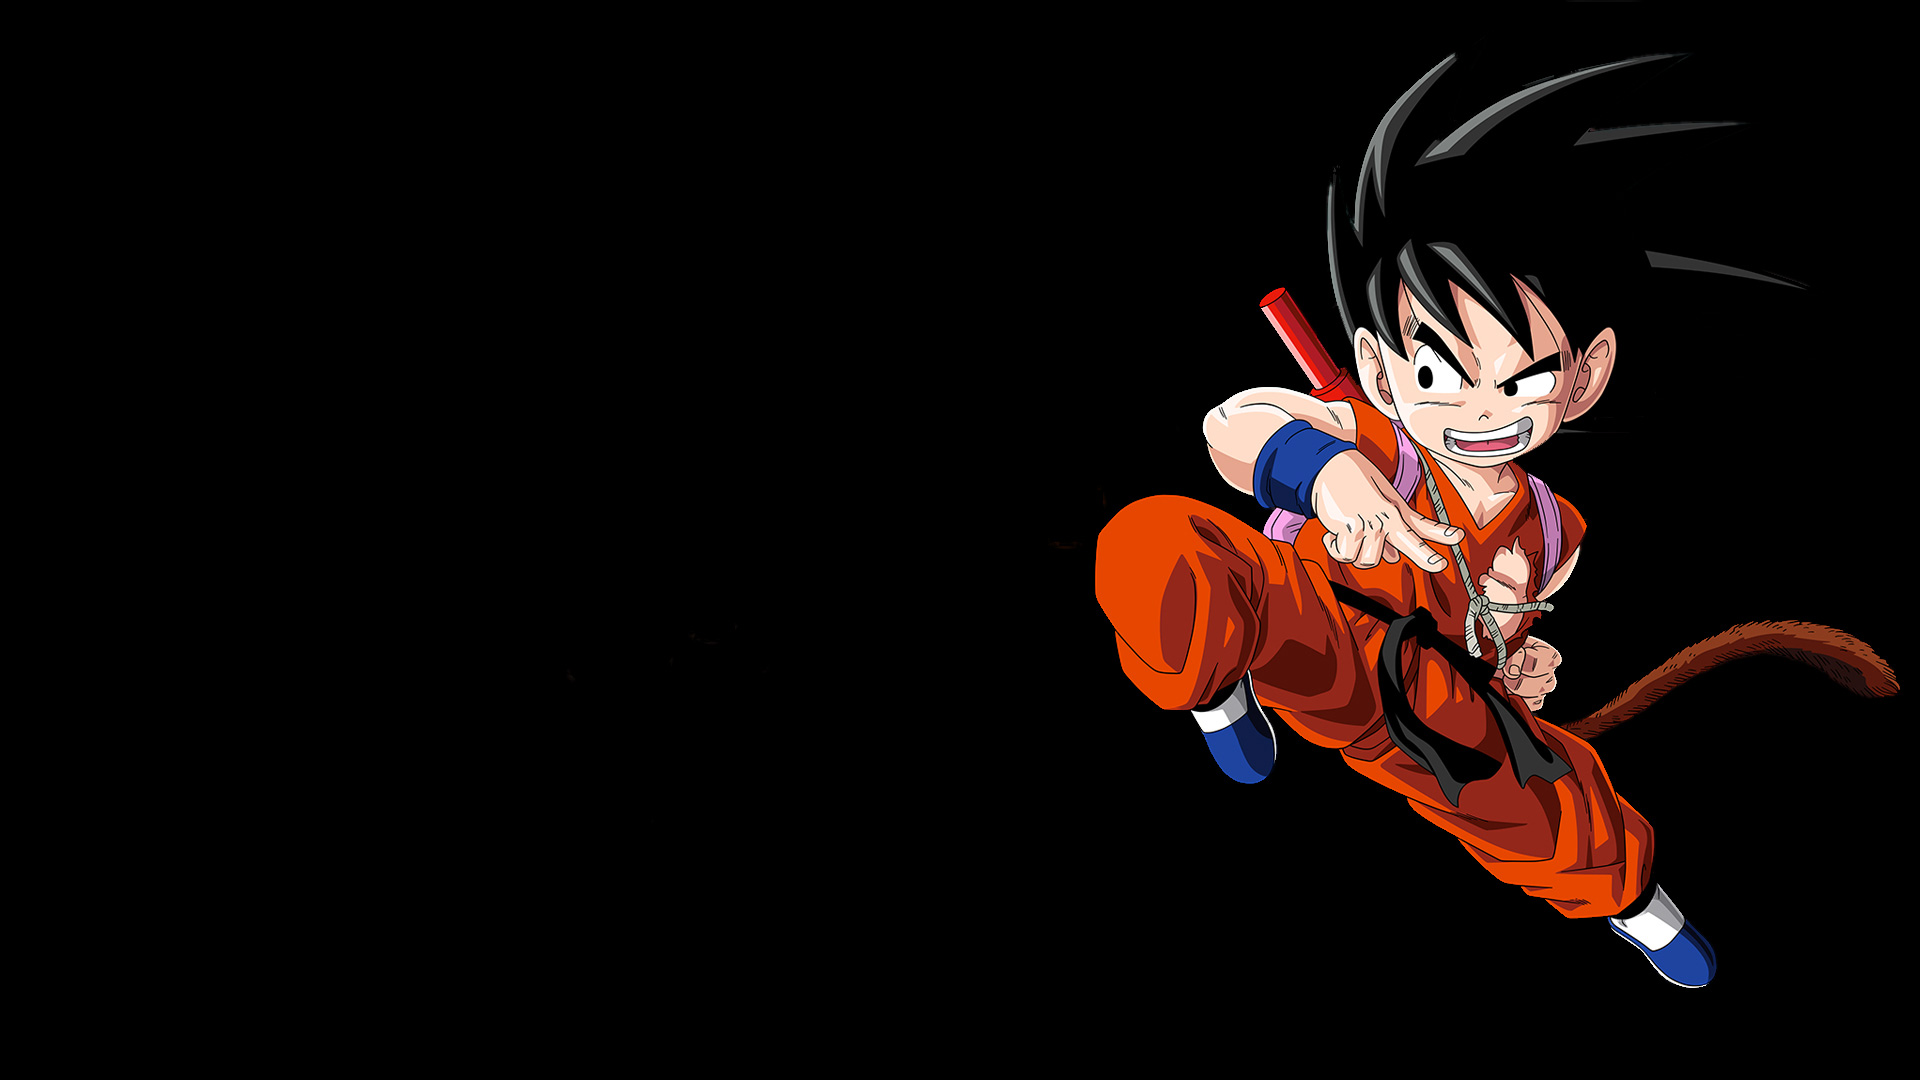 40 Best Goku Wallpaper hd for PC Dragon Ball Z